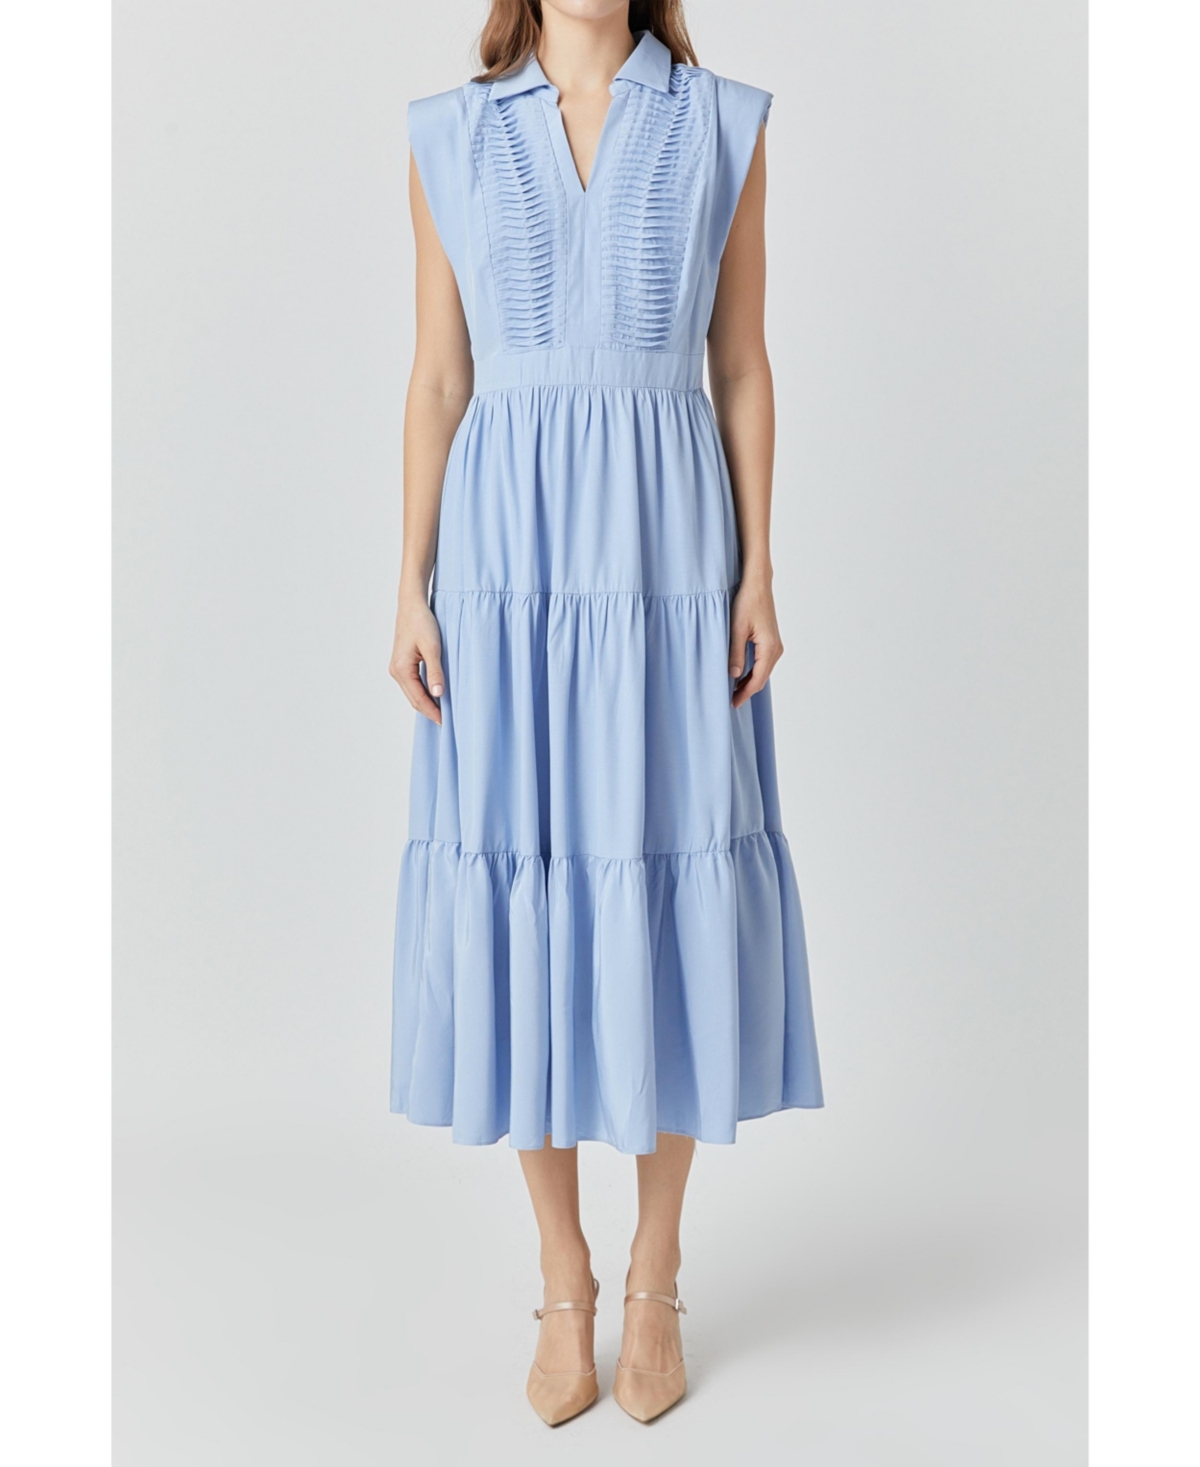 Women's Pintuck Details Sleeveless Midi Dress - Powder blue